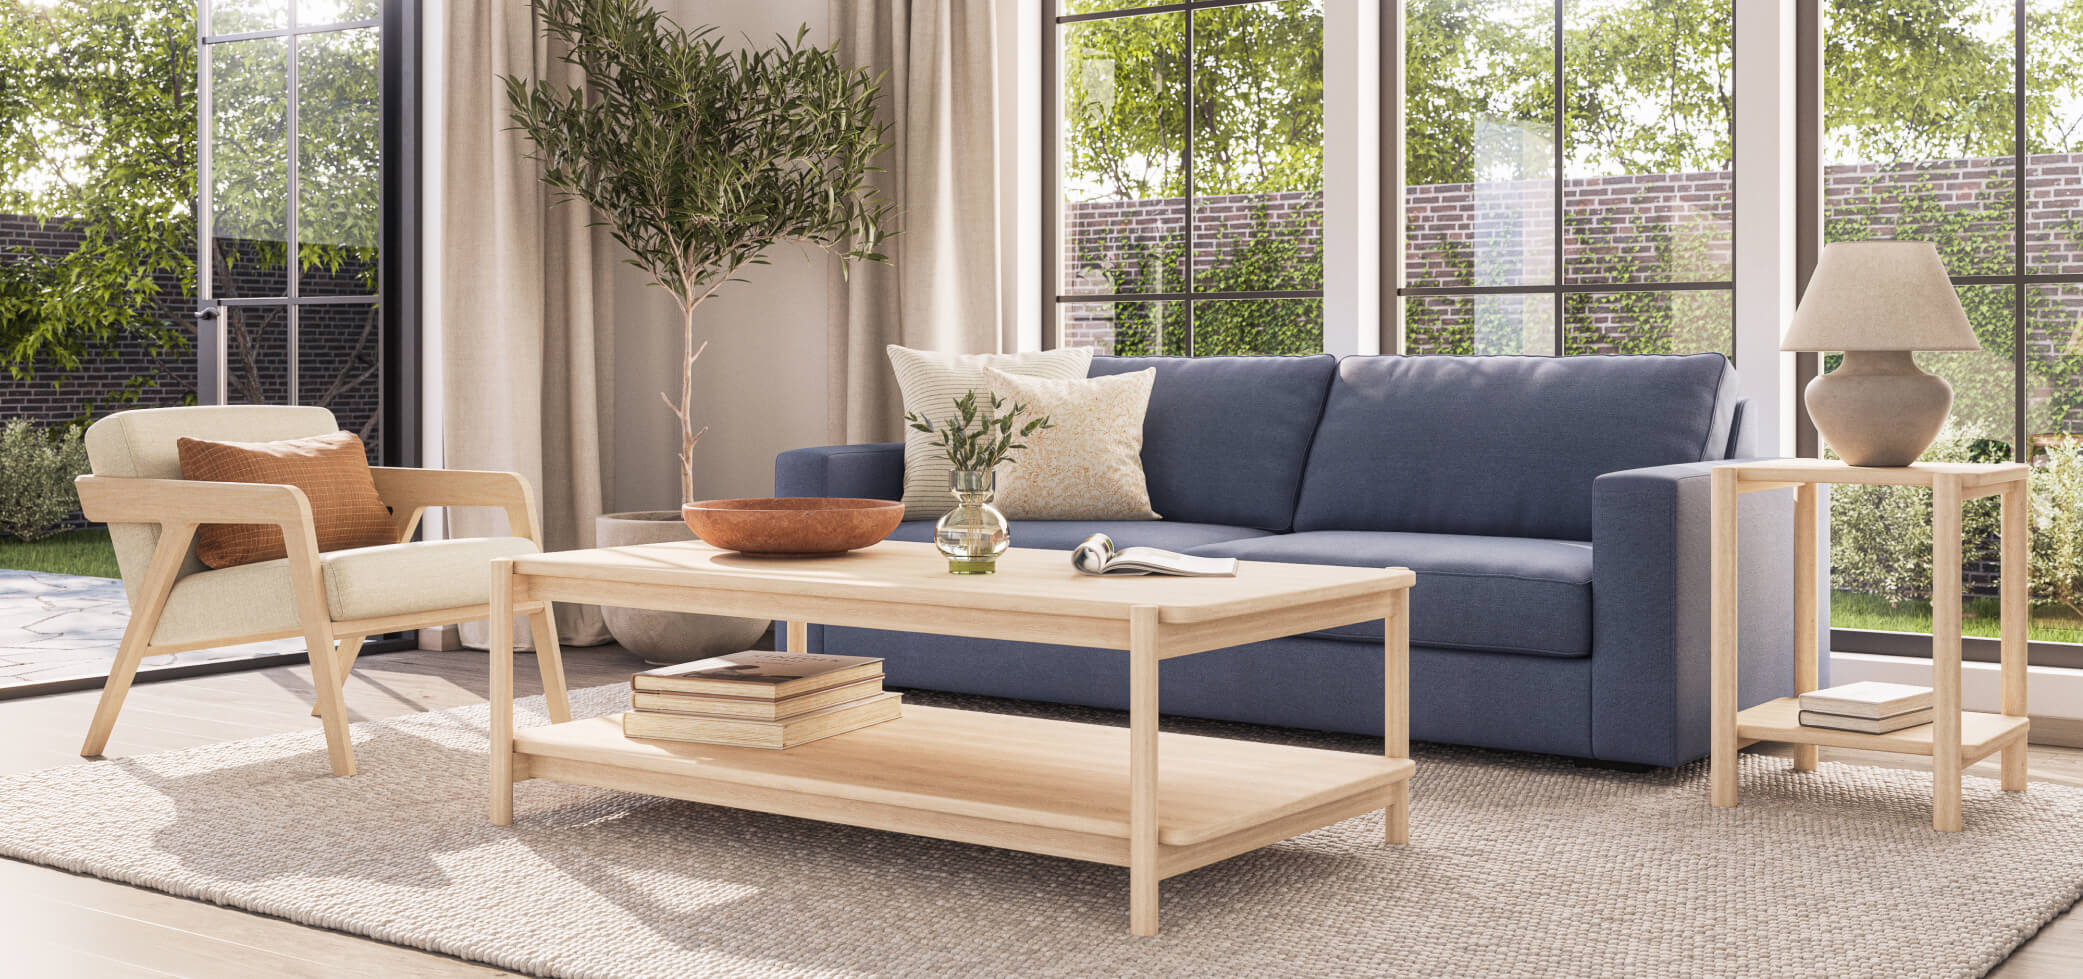 blue rio sofa with maple furniture